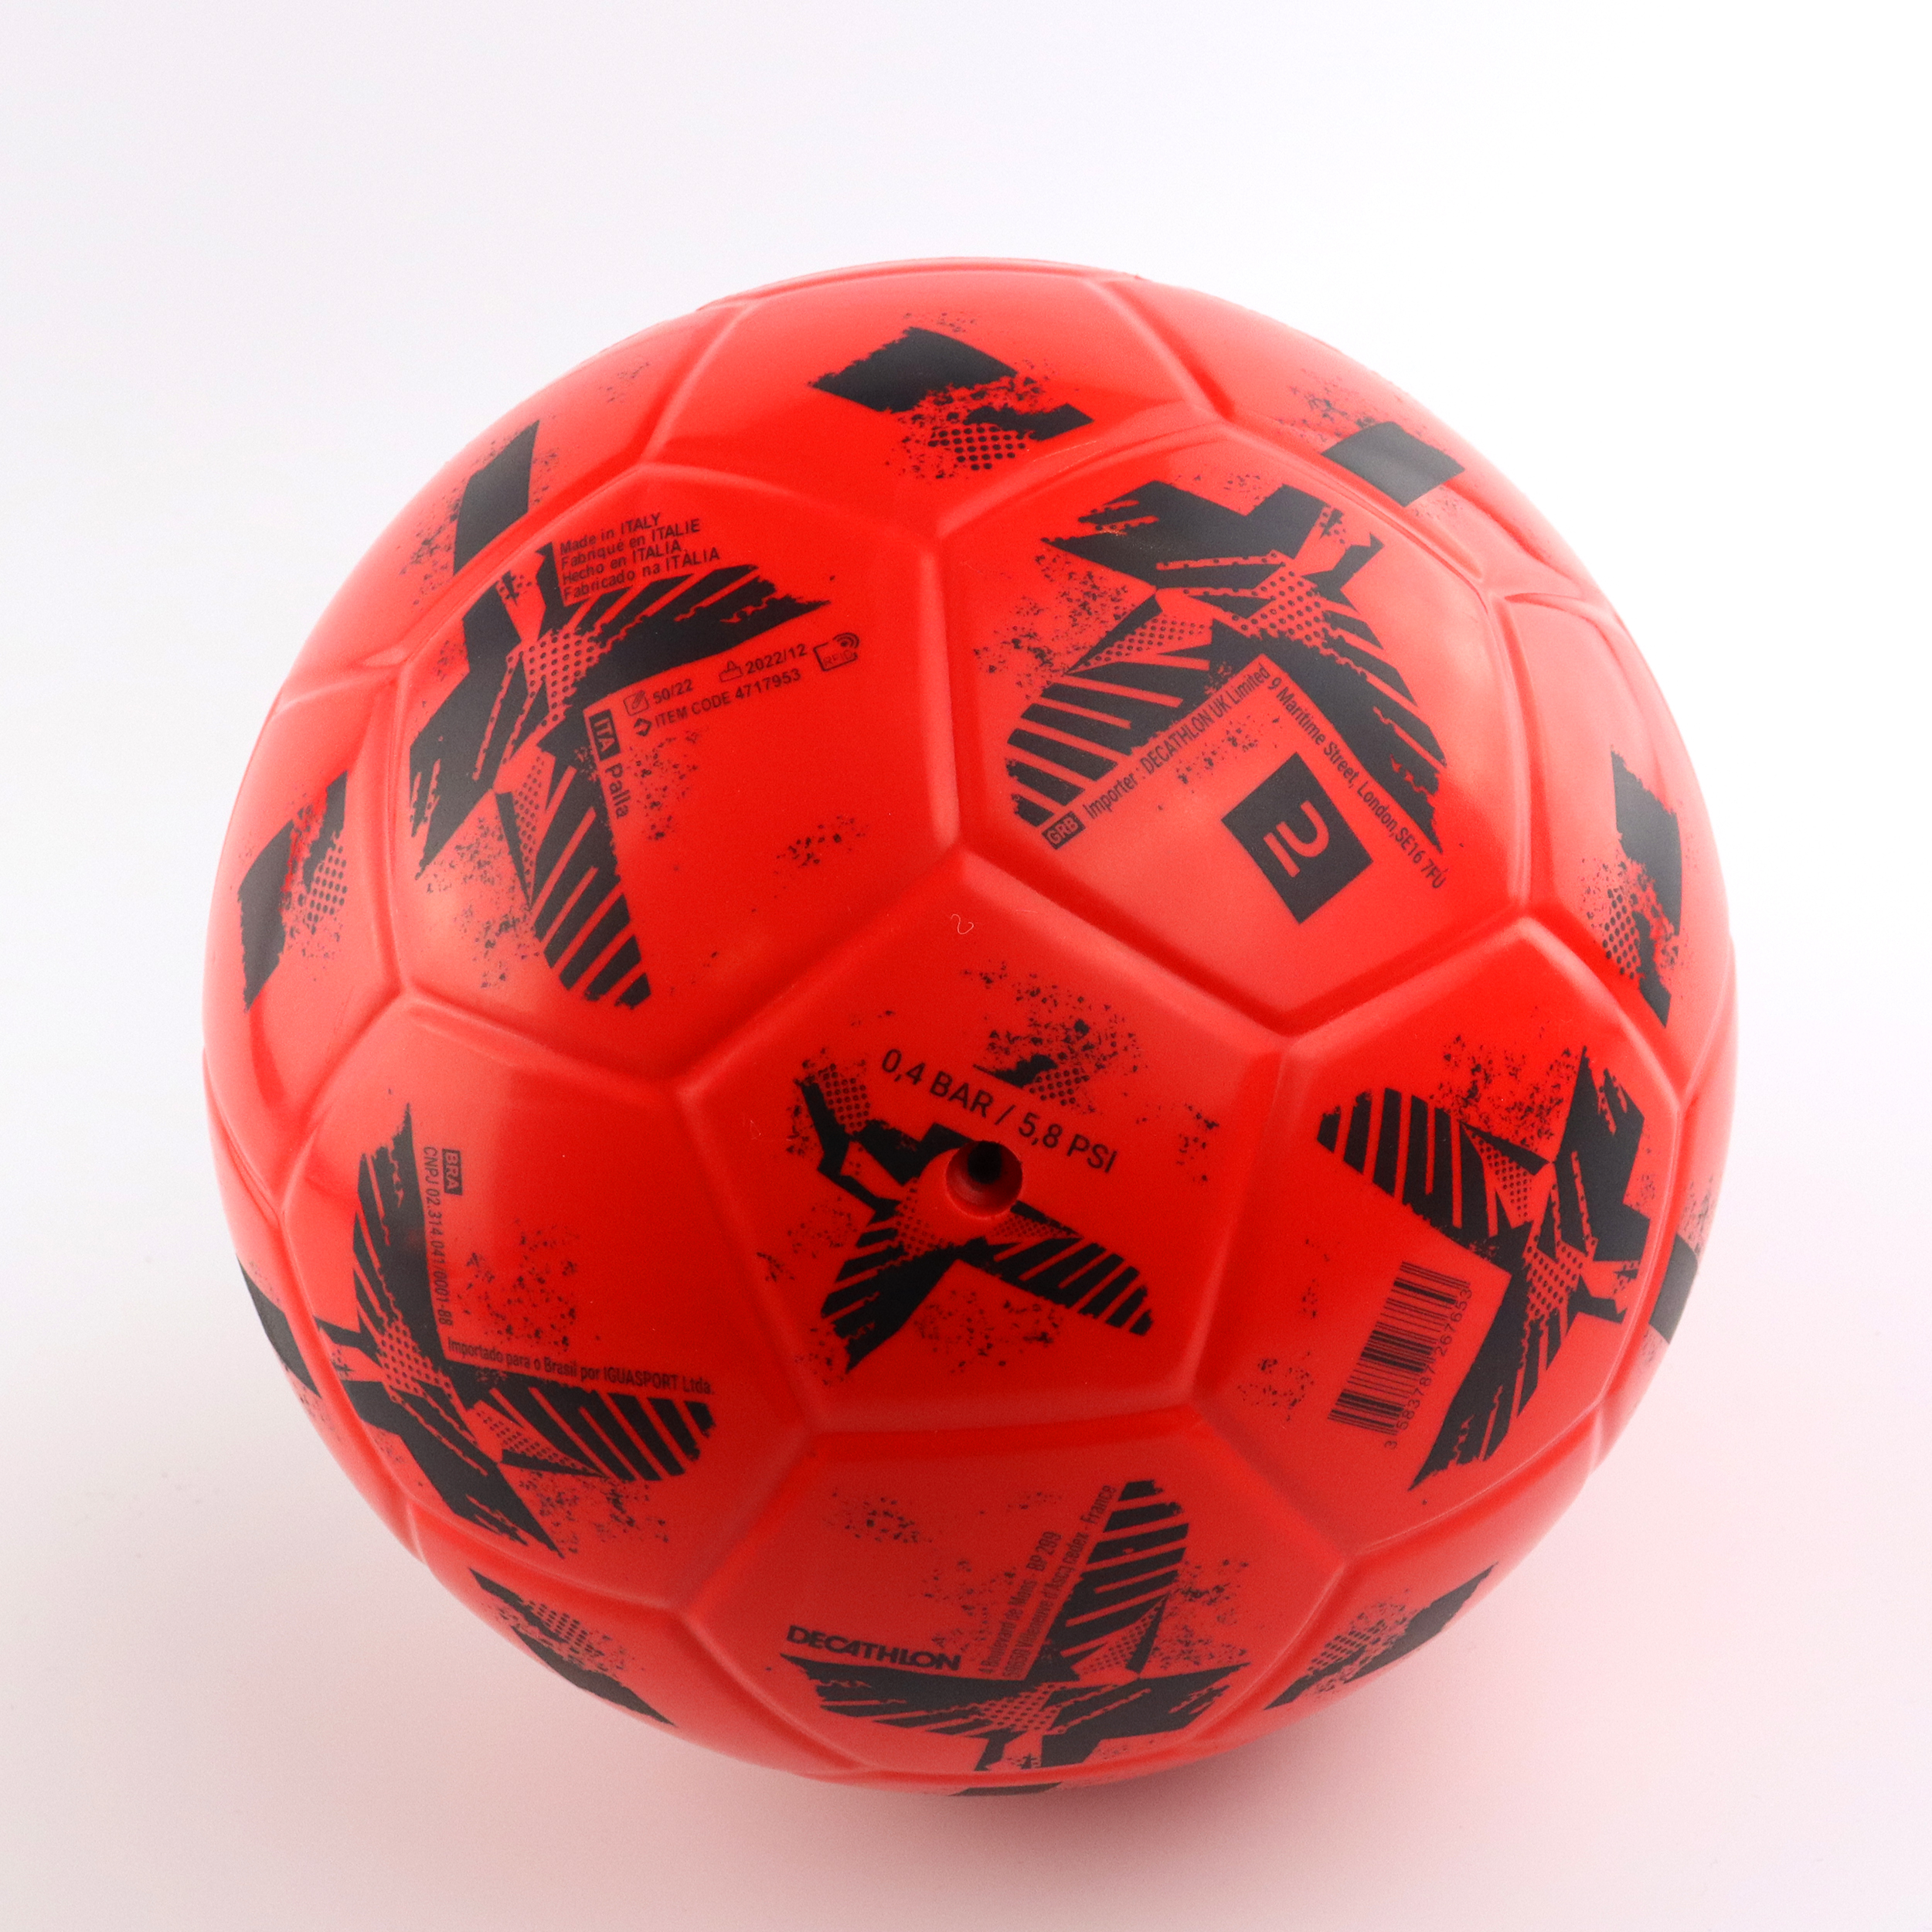 Ballon Football mousse 22 cm Sporti France - Ballons - Equipements